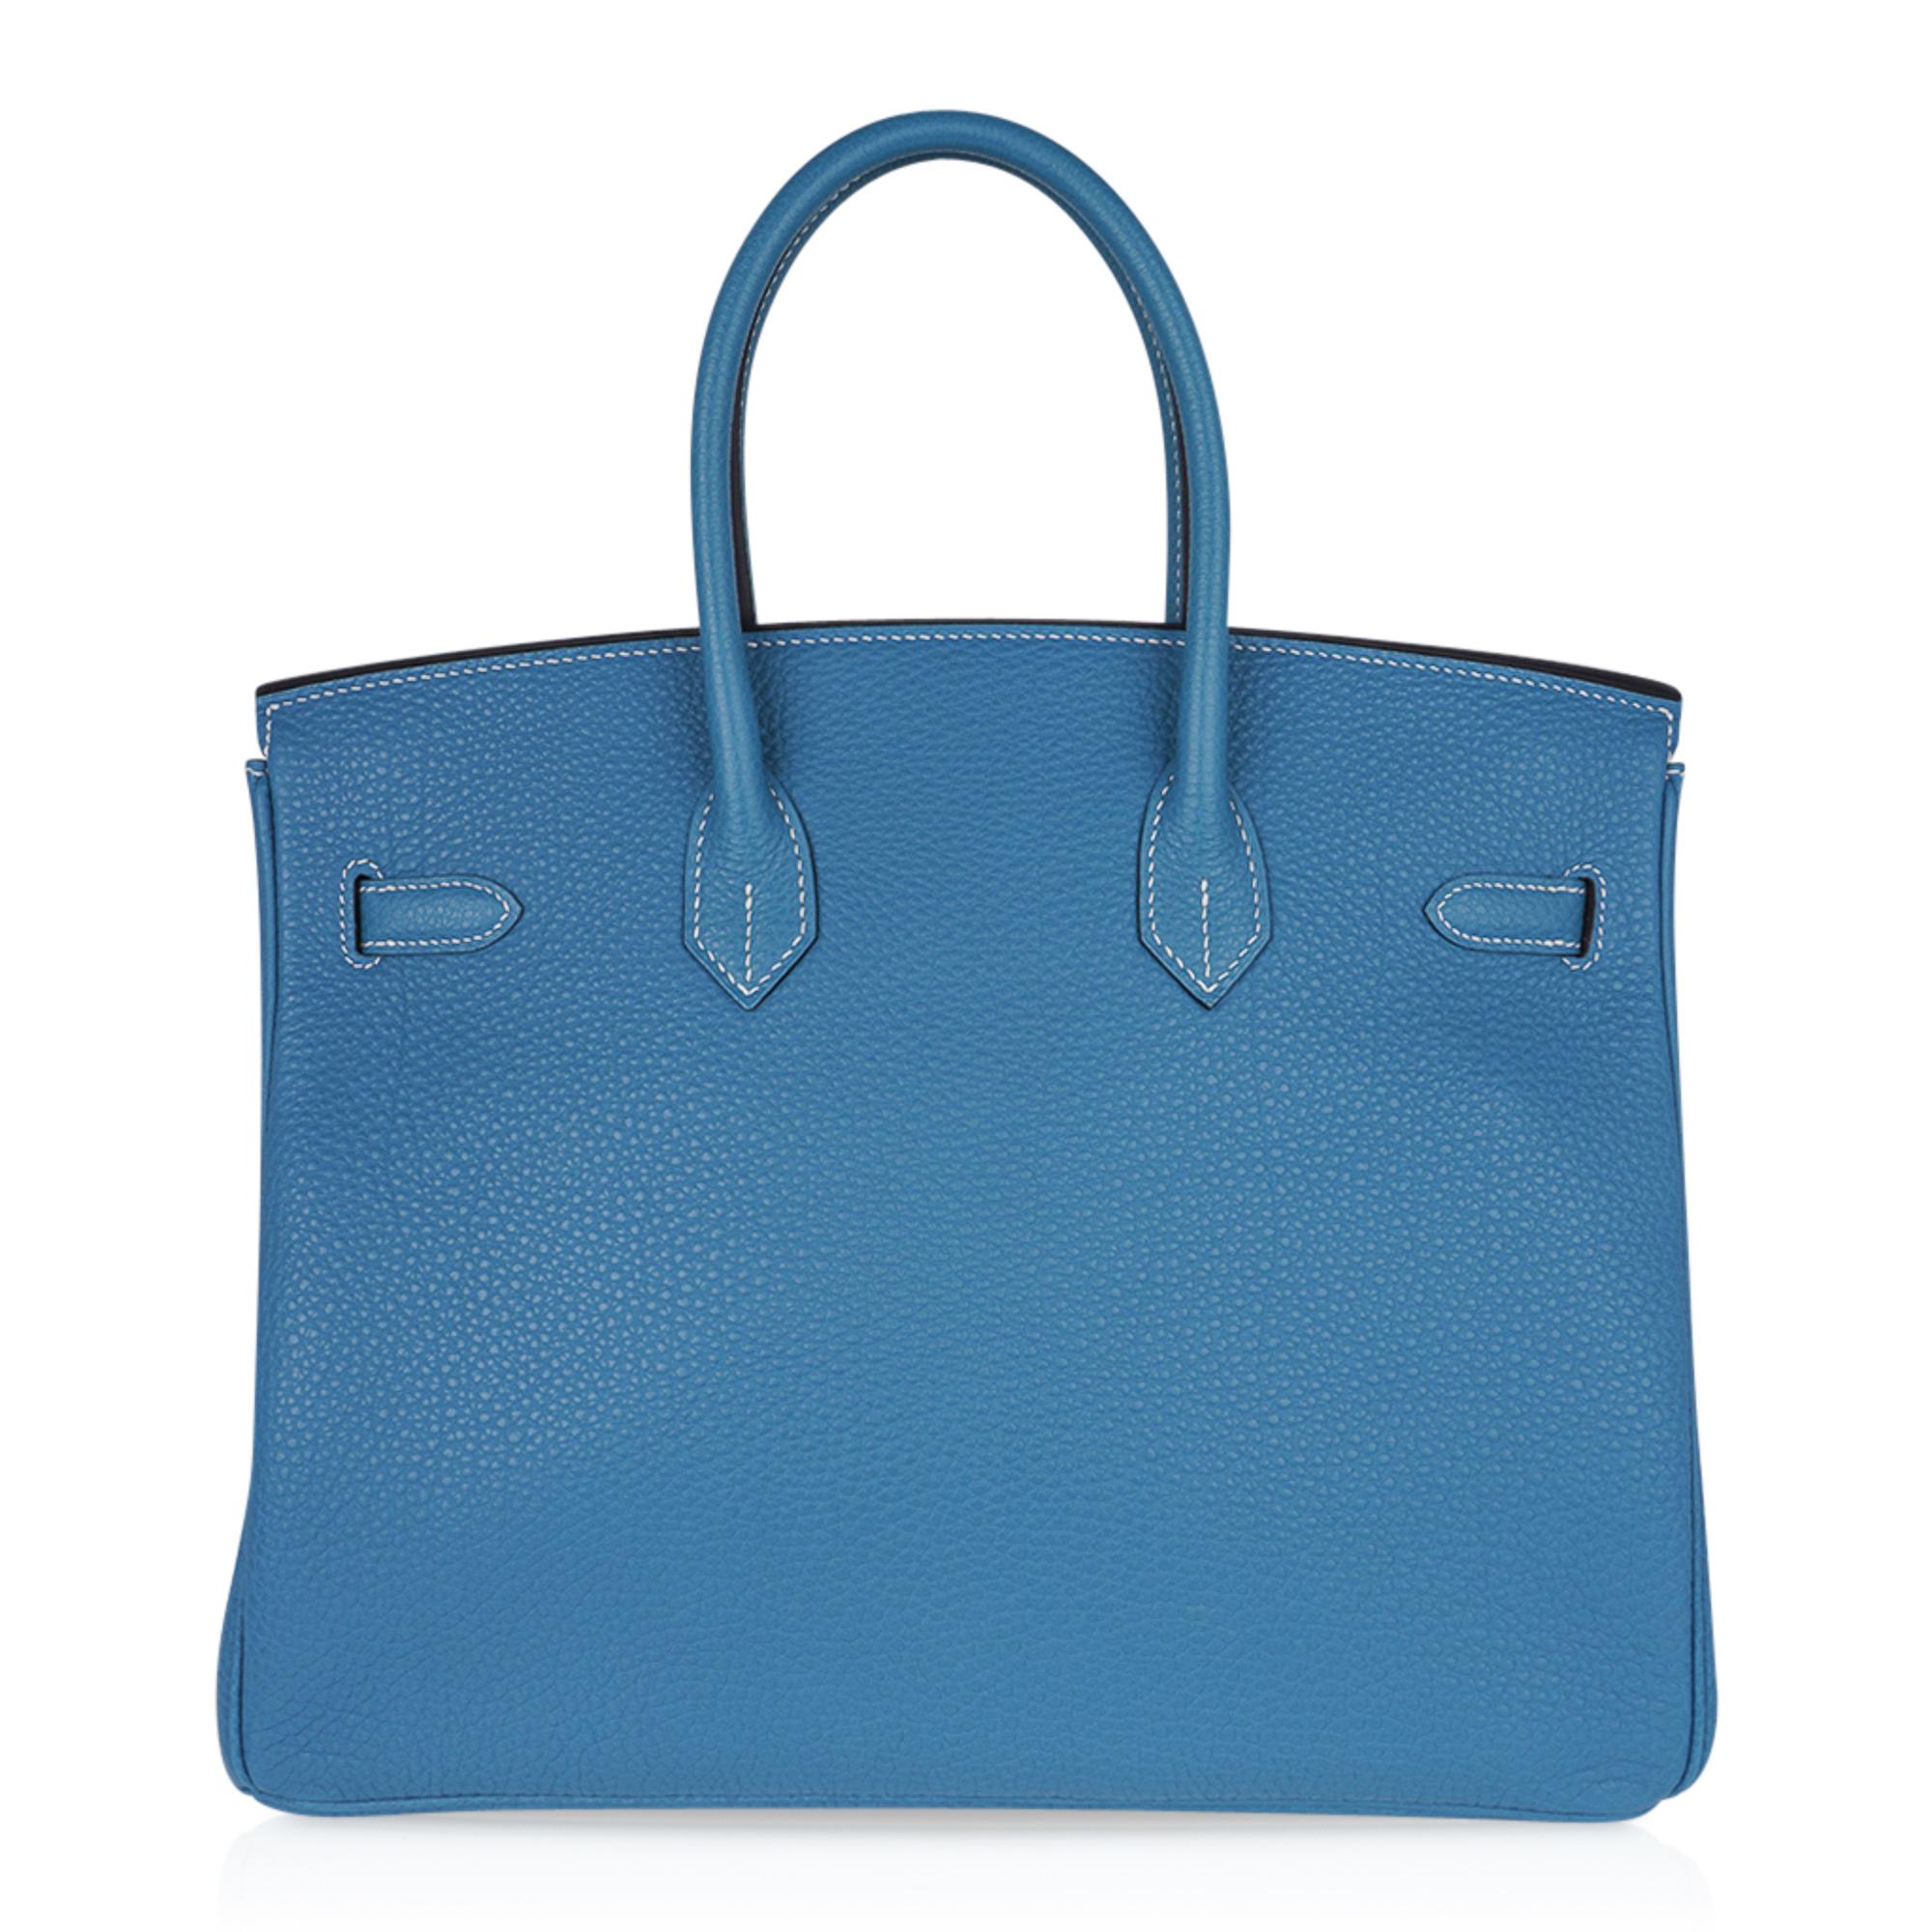 Hermes Birkin 35 Bag Iconic Blue Jean Togo Leather Gold Hardware New Rare 2